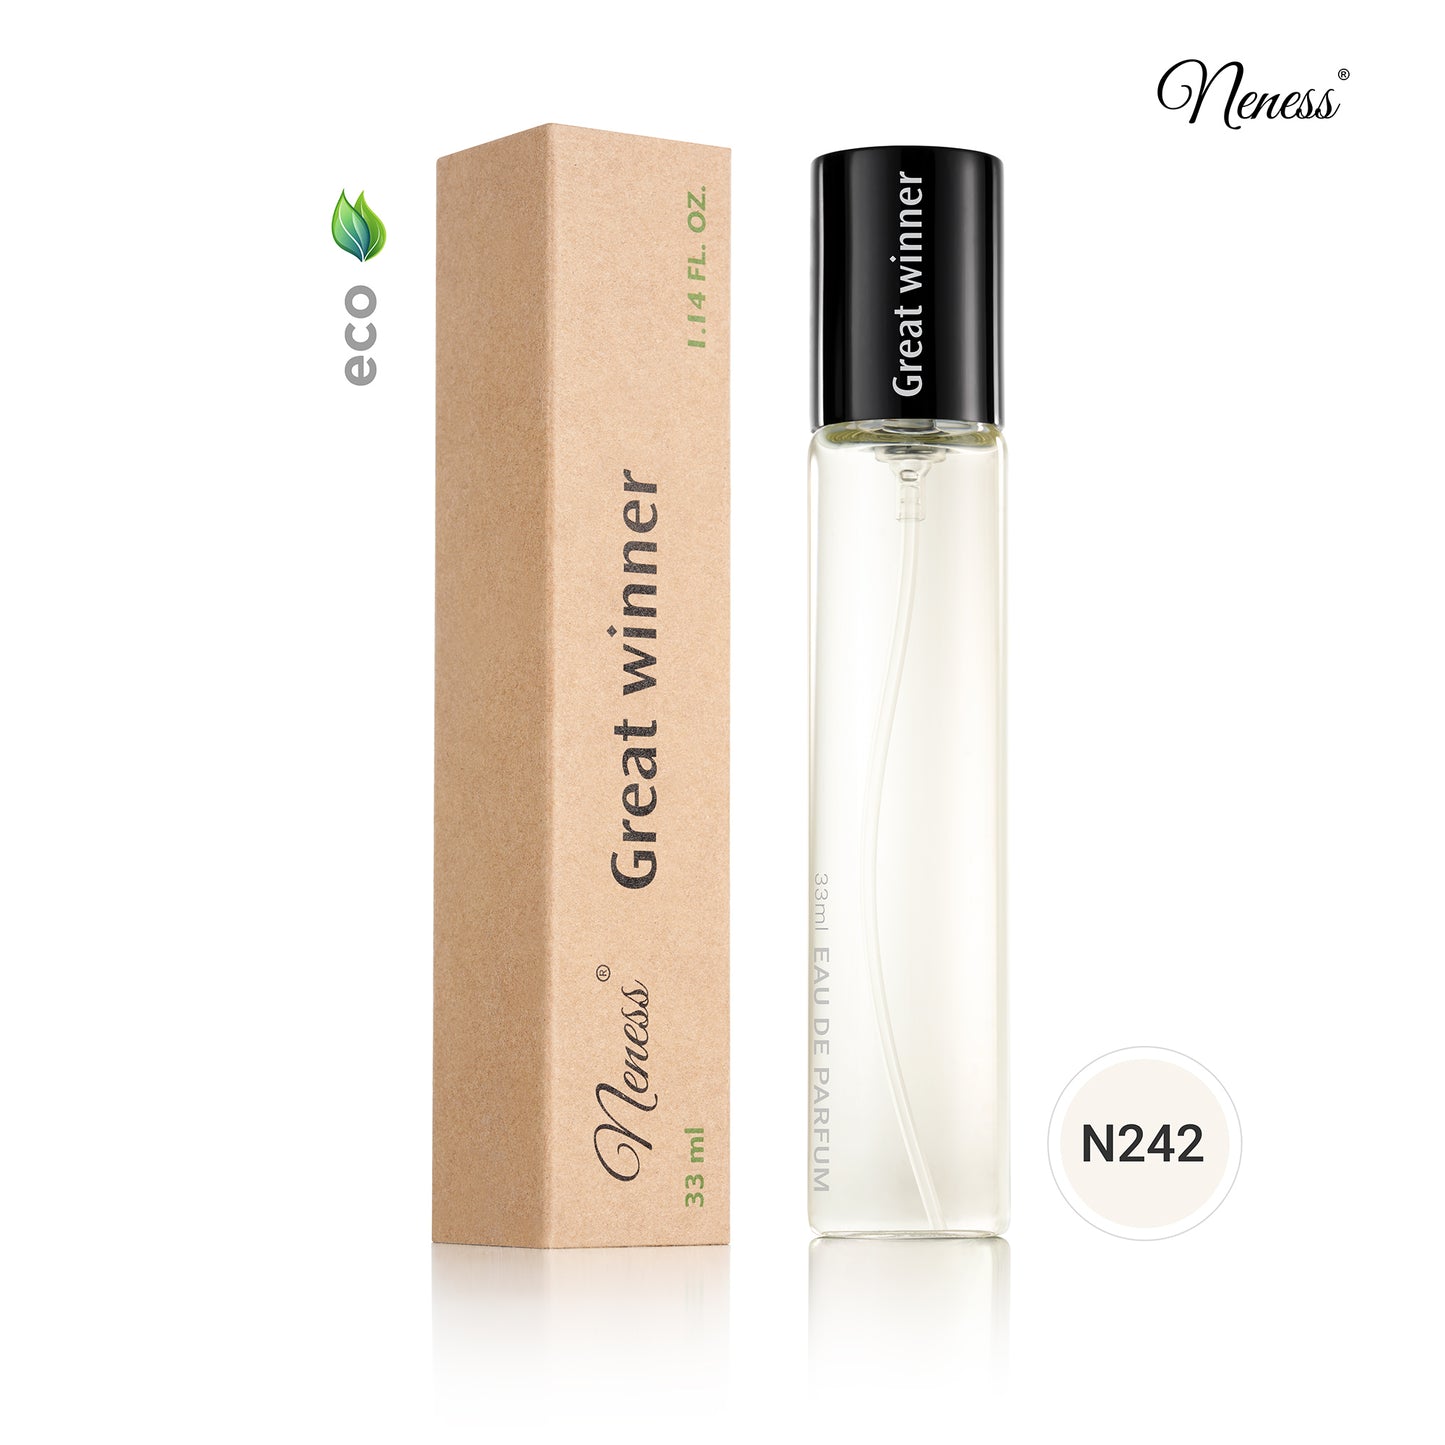 N242. Neness Great Winner - 33 ml - Perfumes For Men